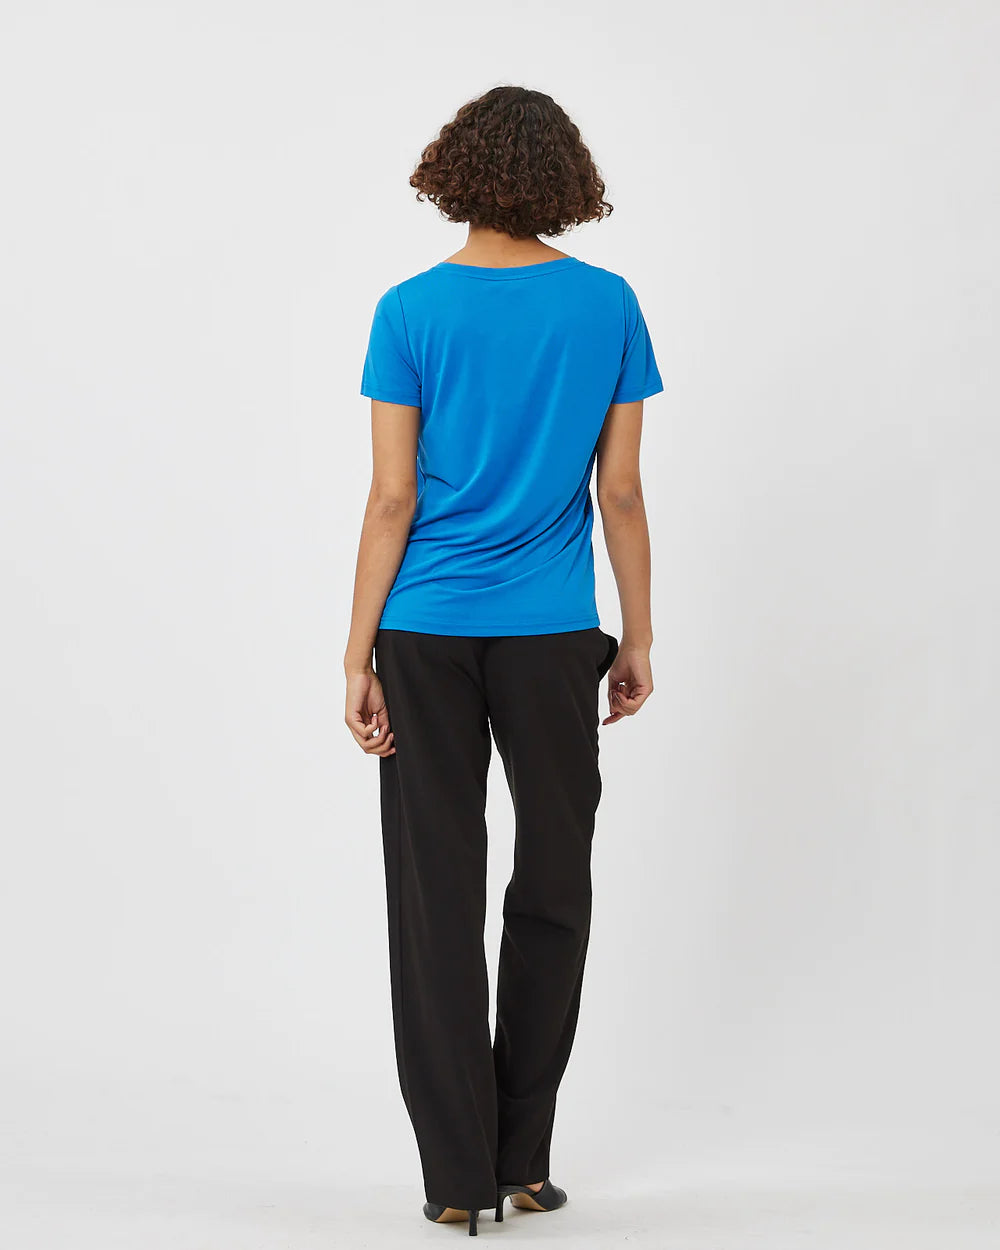 Rynih 0281 T-Shirt Lapis Blue